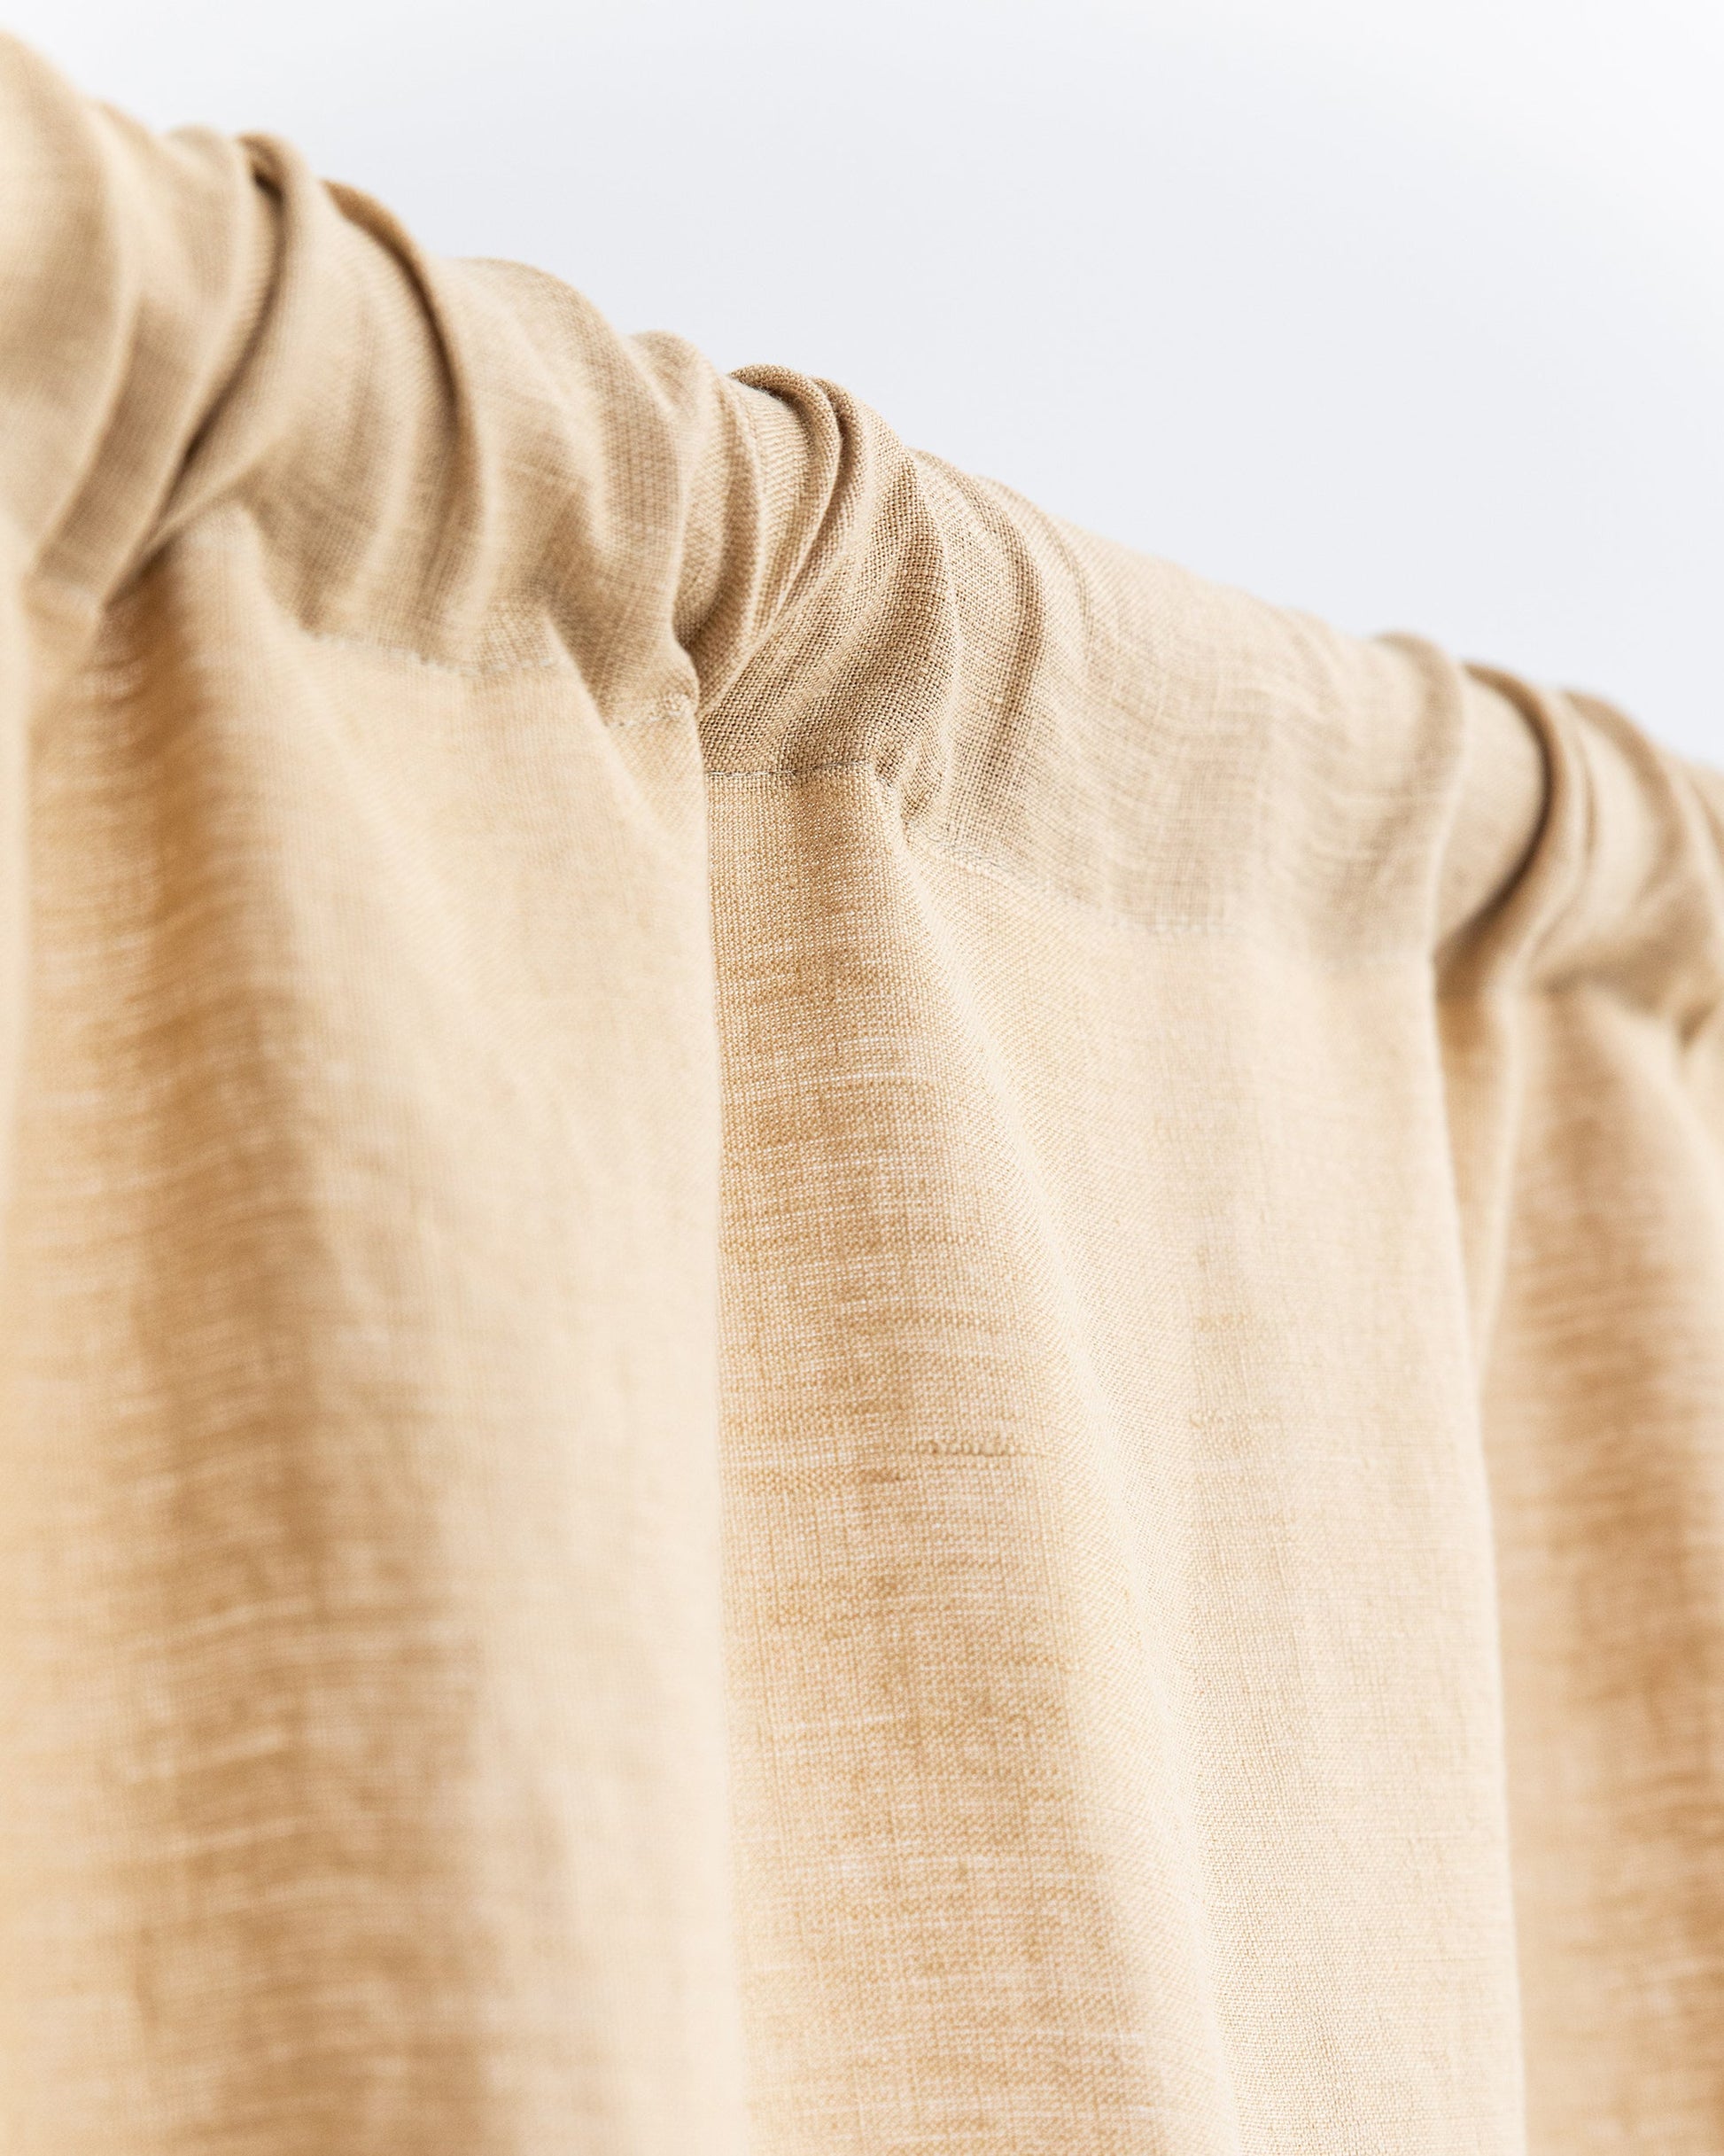 Rod pocket linen curtain panel (1 pcs) in Sandy beige - MagicLinen